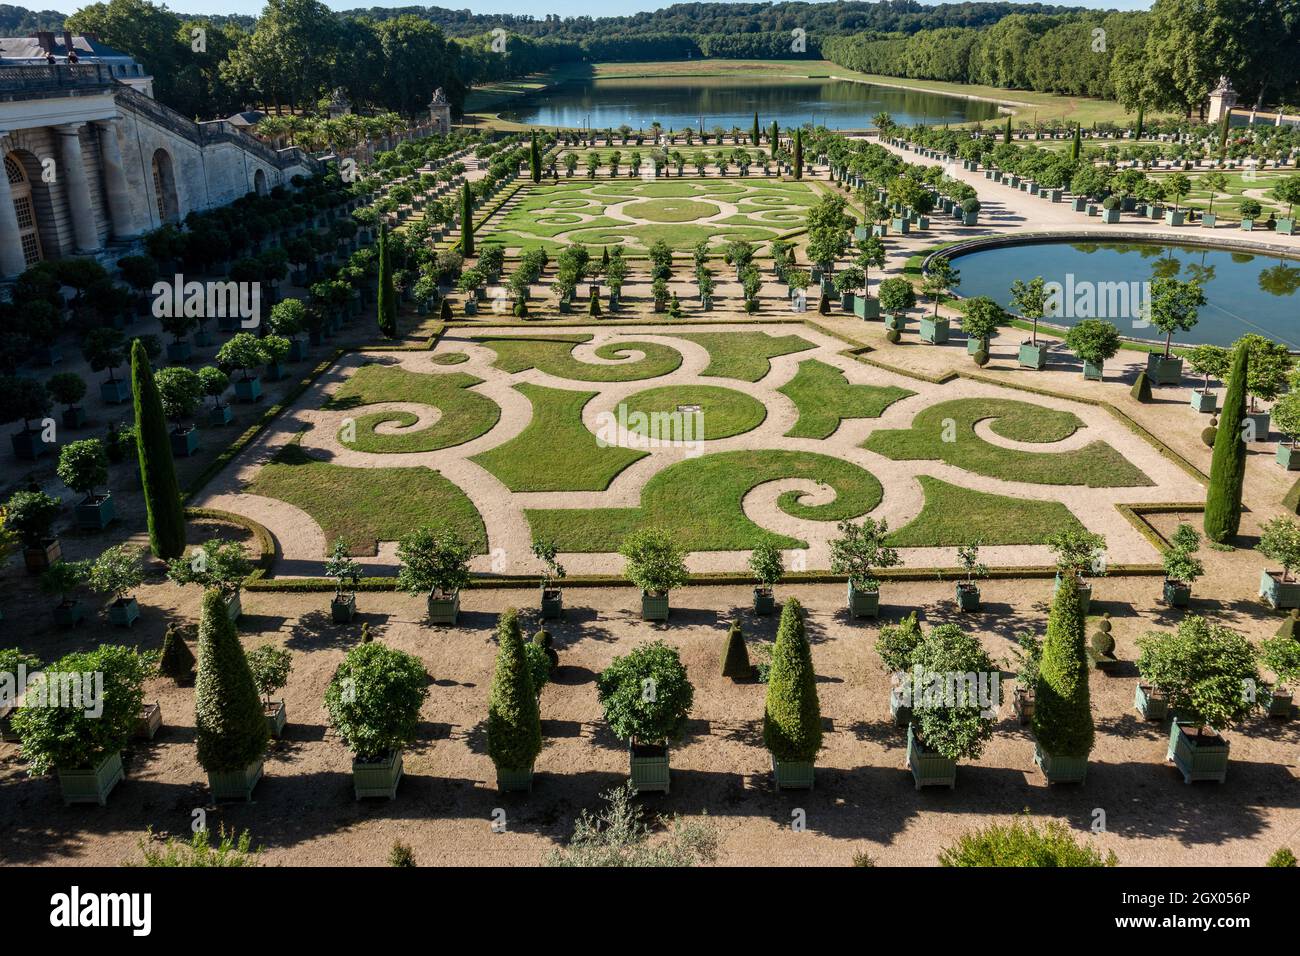 Palace of Versailles Stock Photo